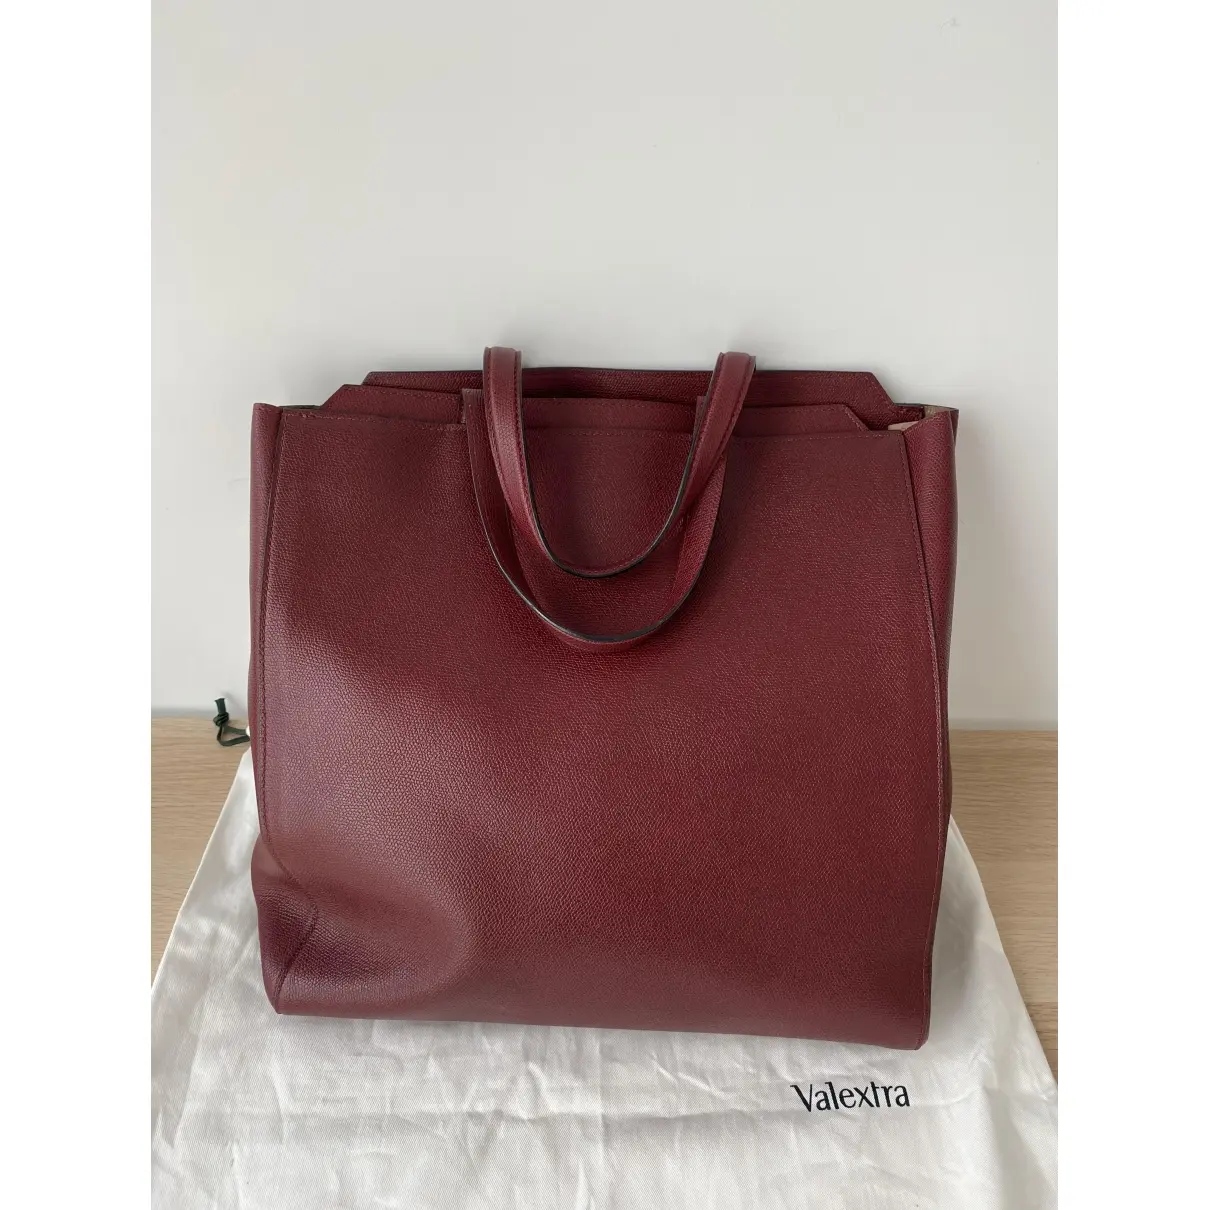 Buy Valextra Leather bag online